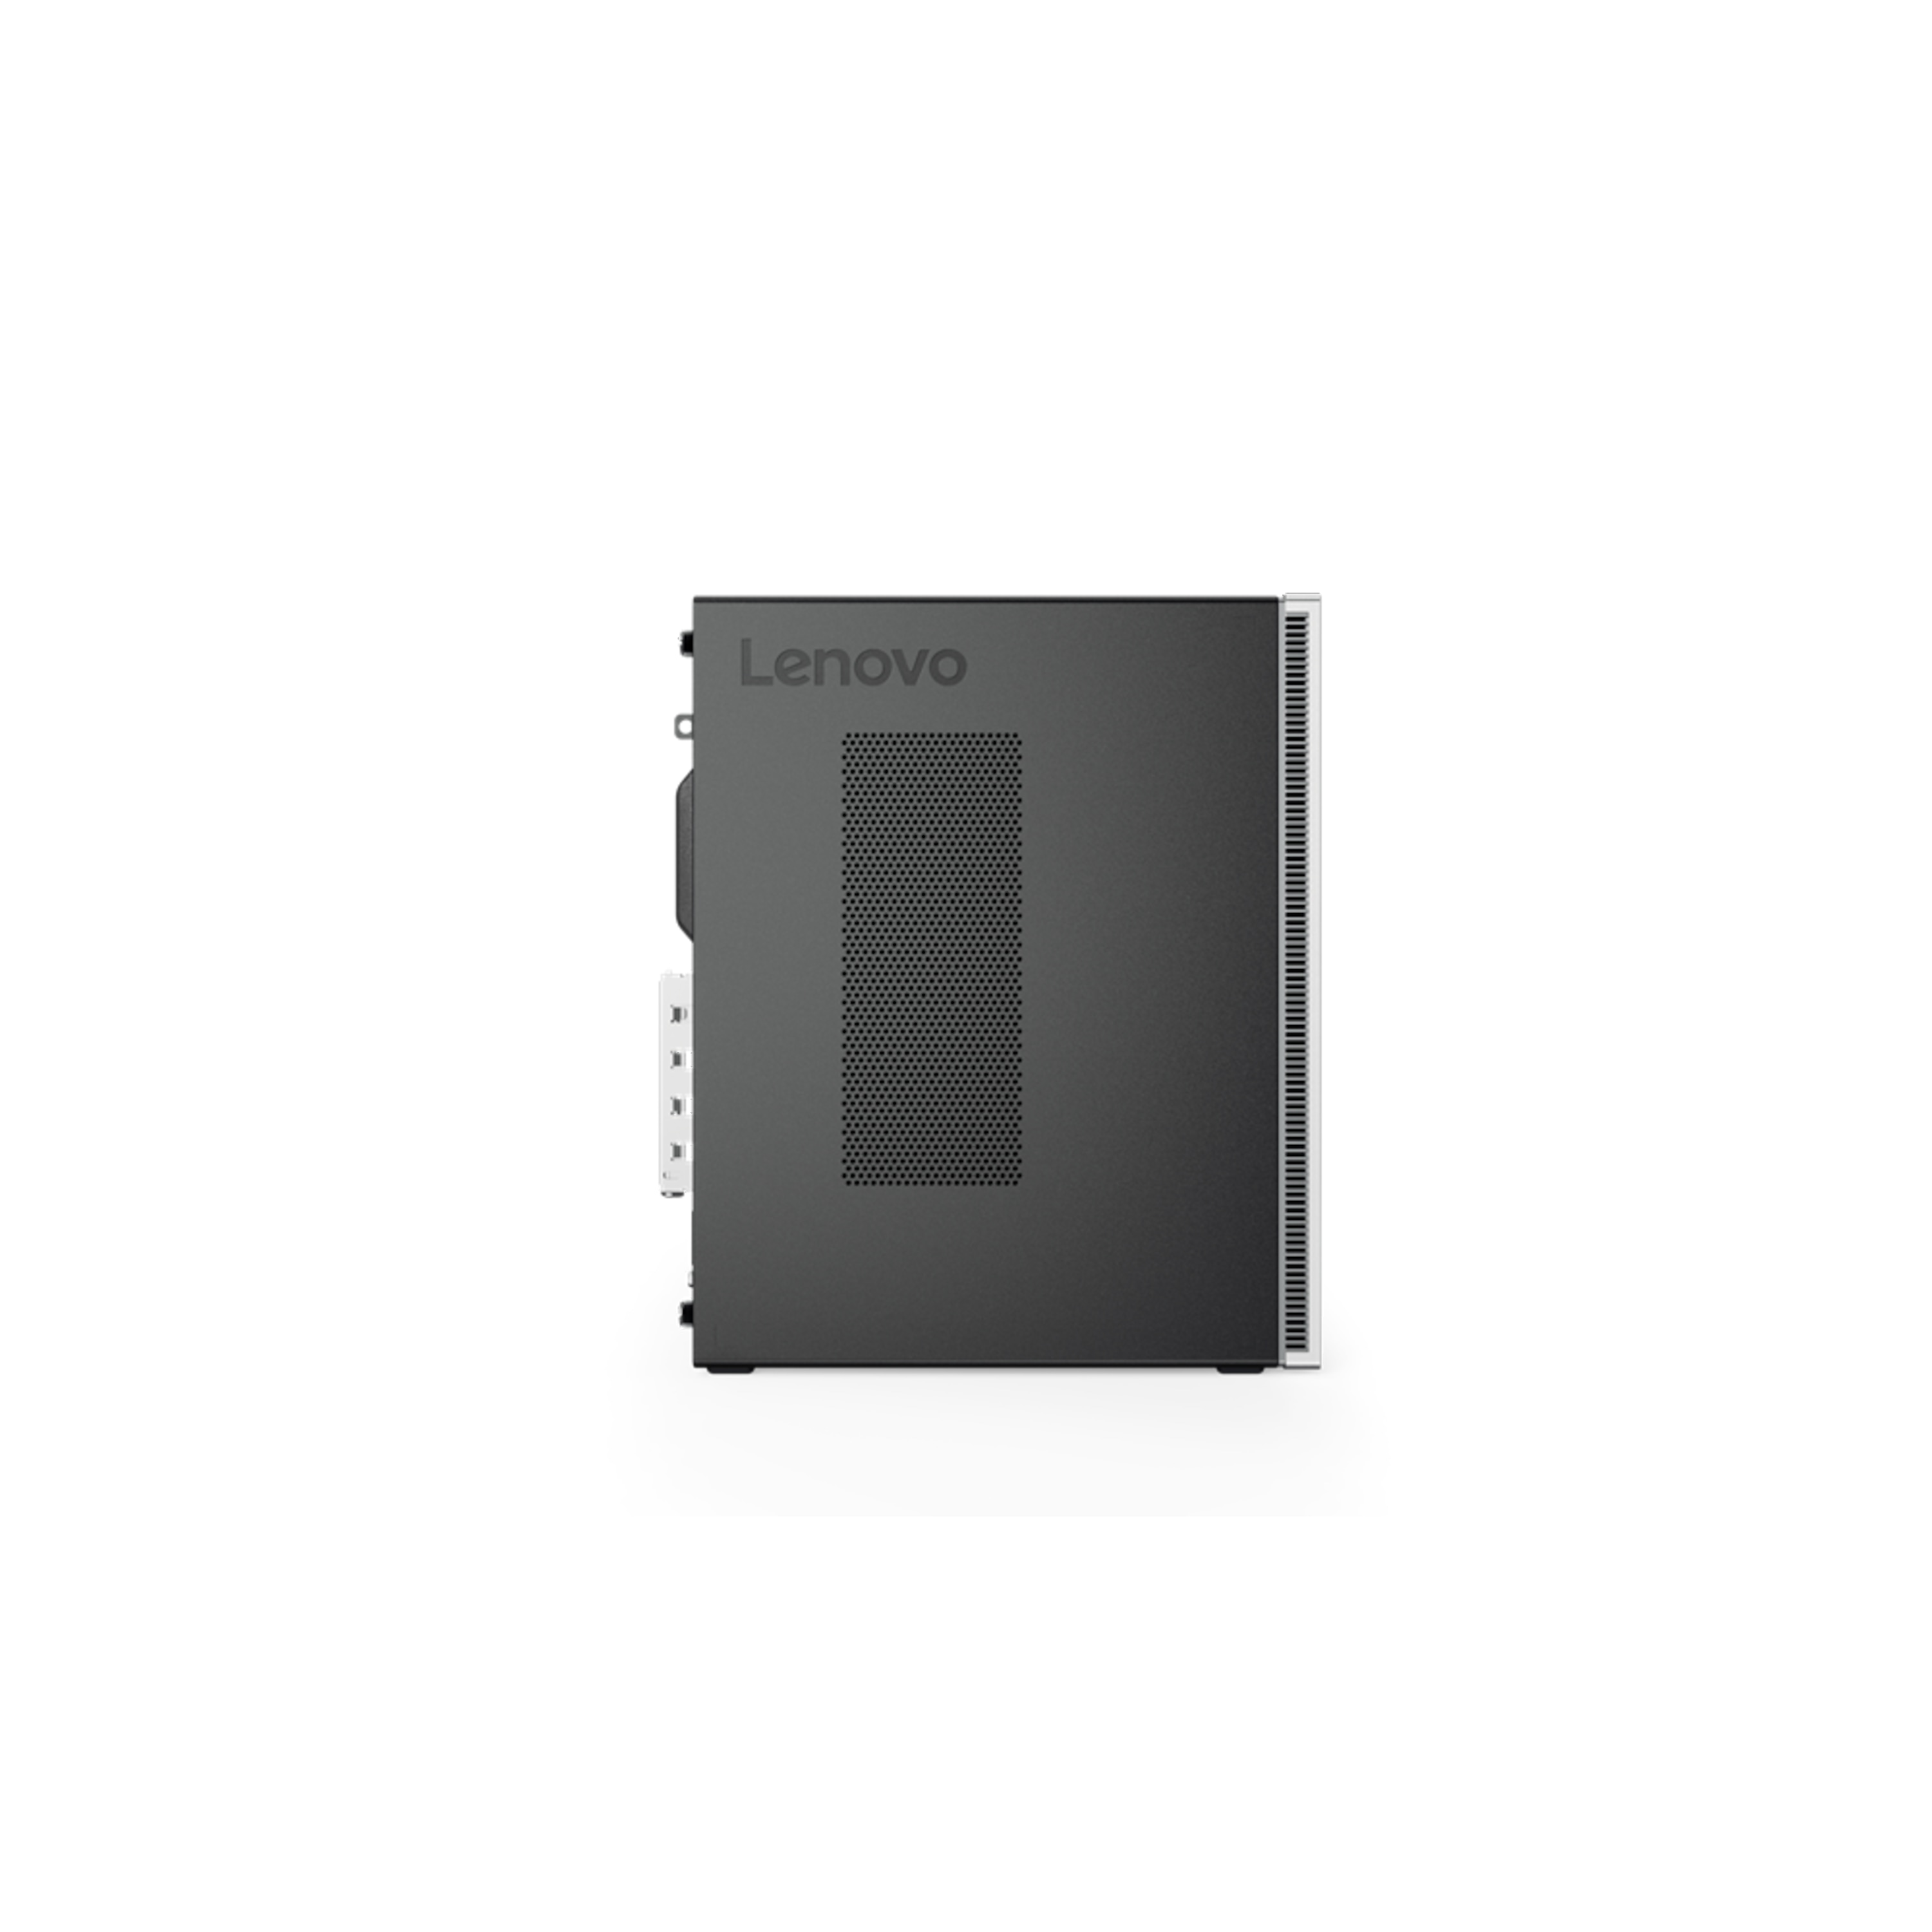 LENOVO IdeaCentre 310s, AMD A9-9425, Windows 10 Home, 1 TB HDD, 8 GB RAM, Gaming PC (B-Ware)